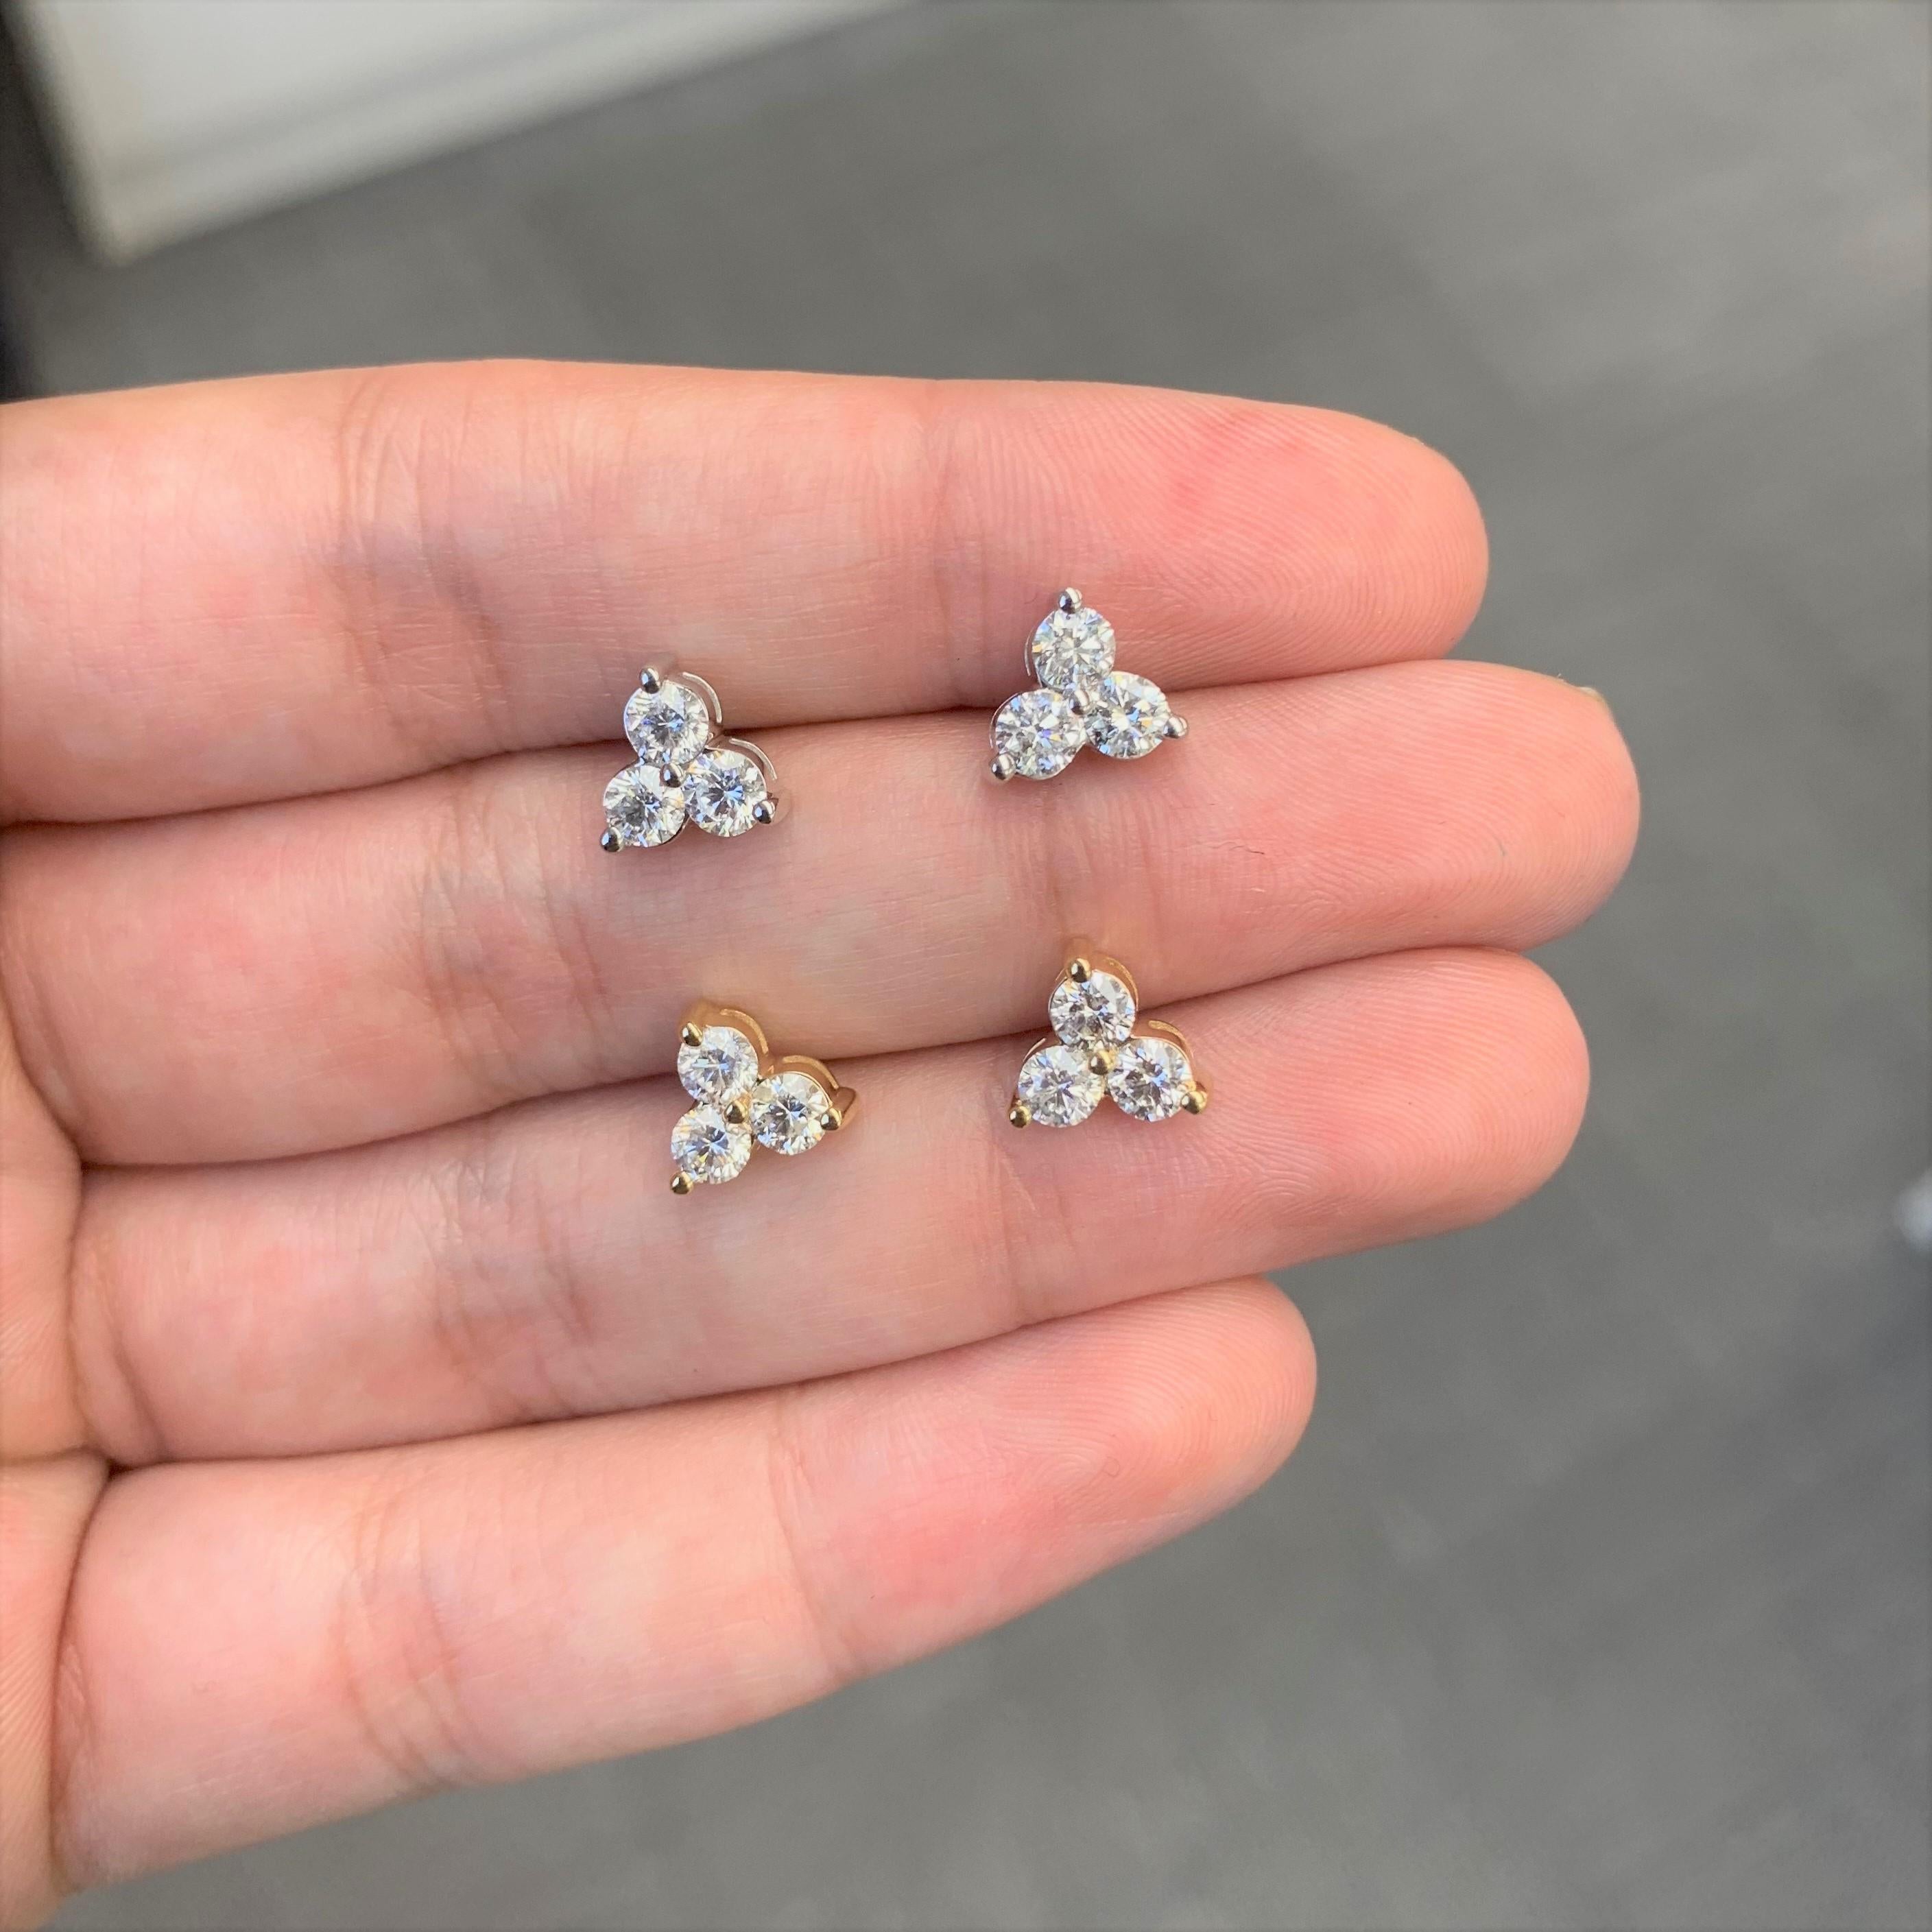 4 stone stud earrings